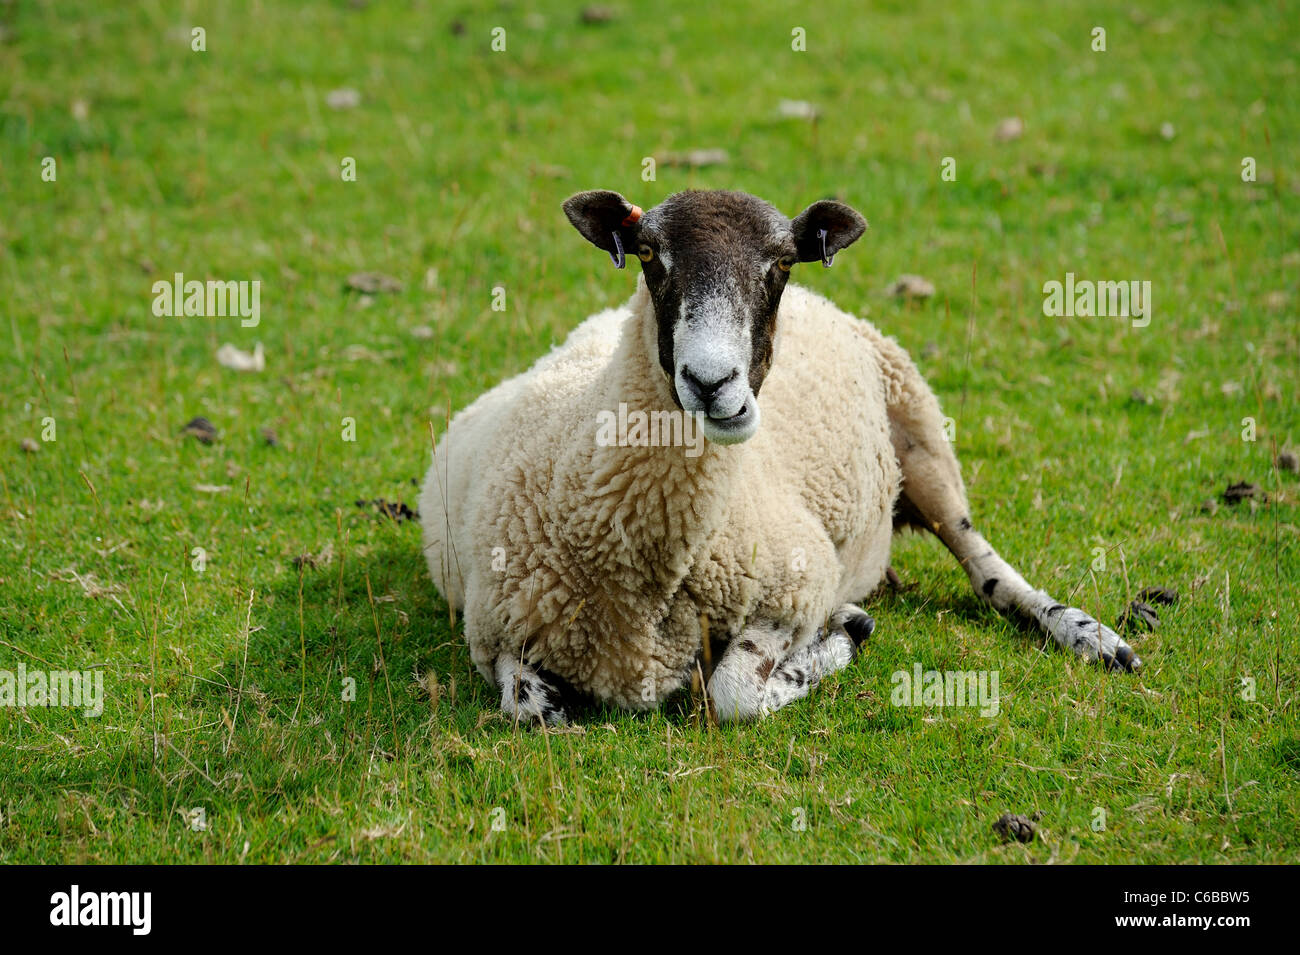 sheep chewing laying down england uk Stock Photo